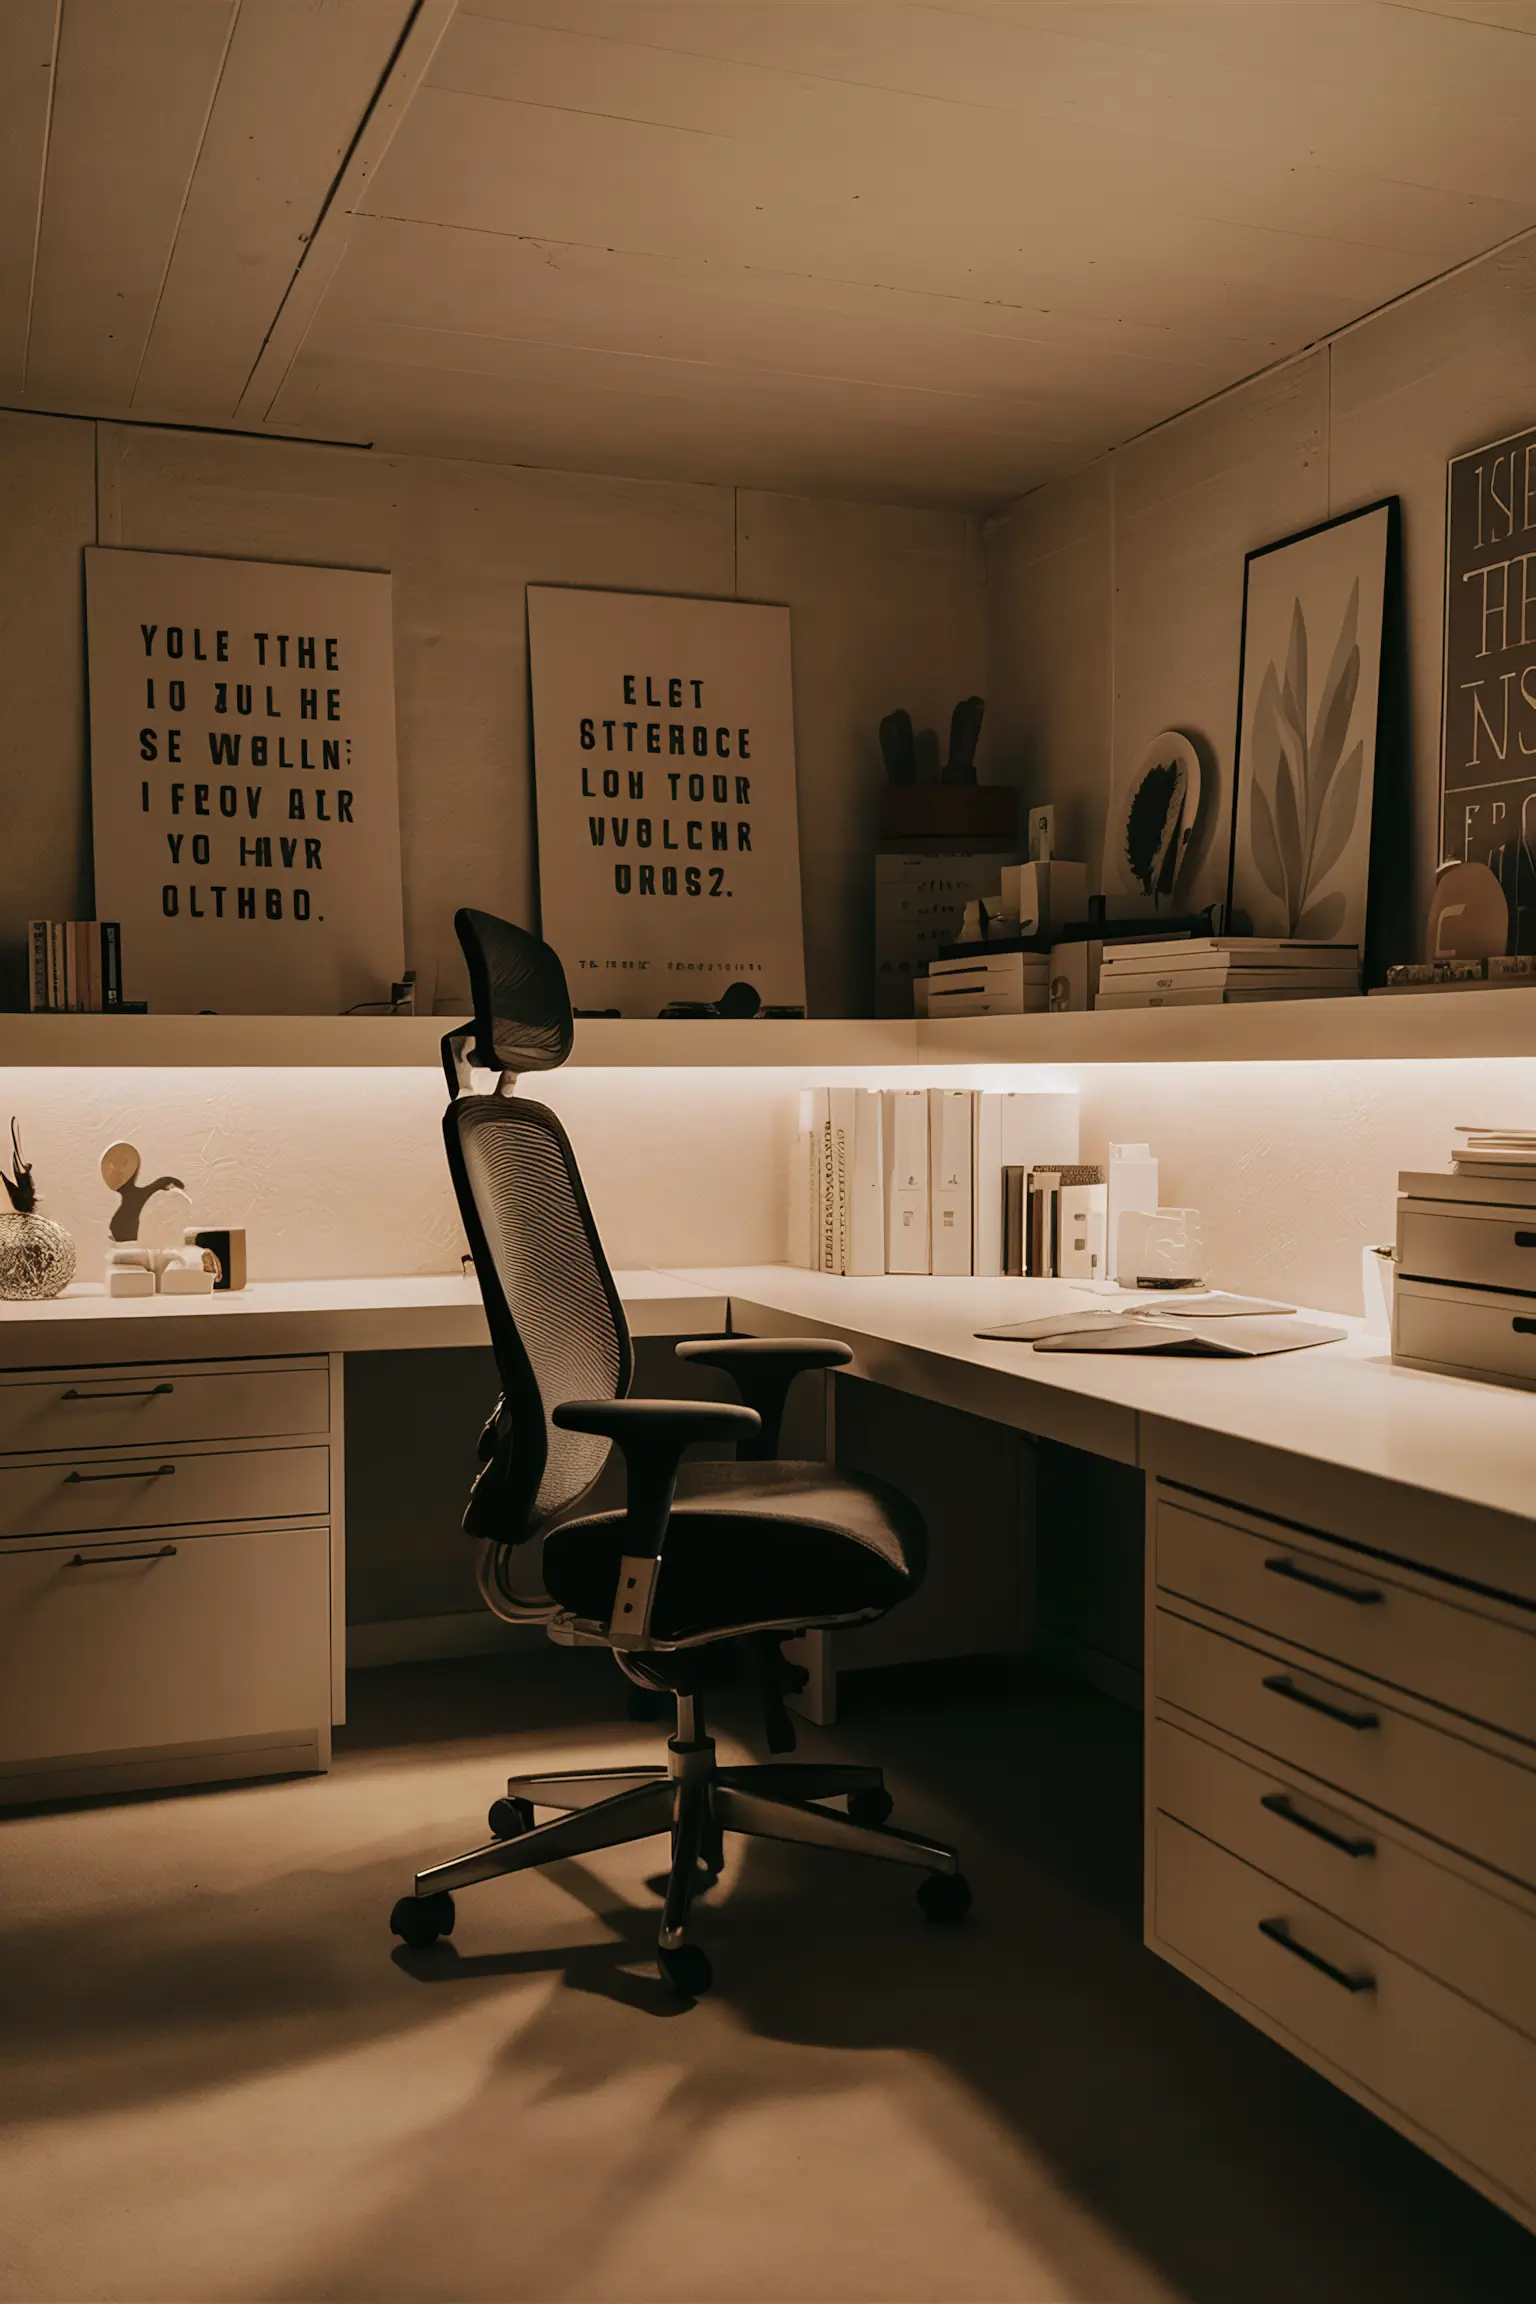 Minimalistic basement office with ergonomic furniture and motivational decor.